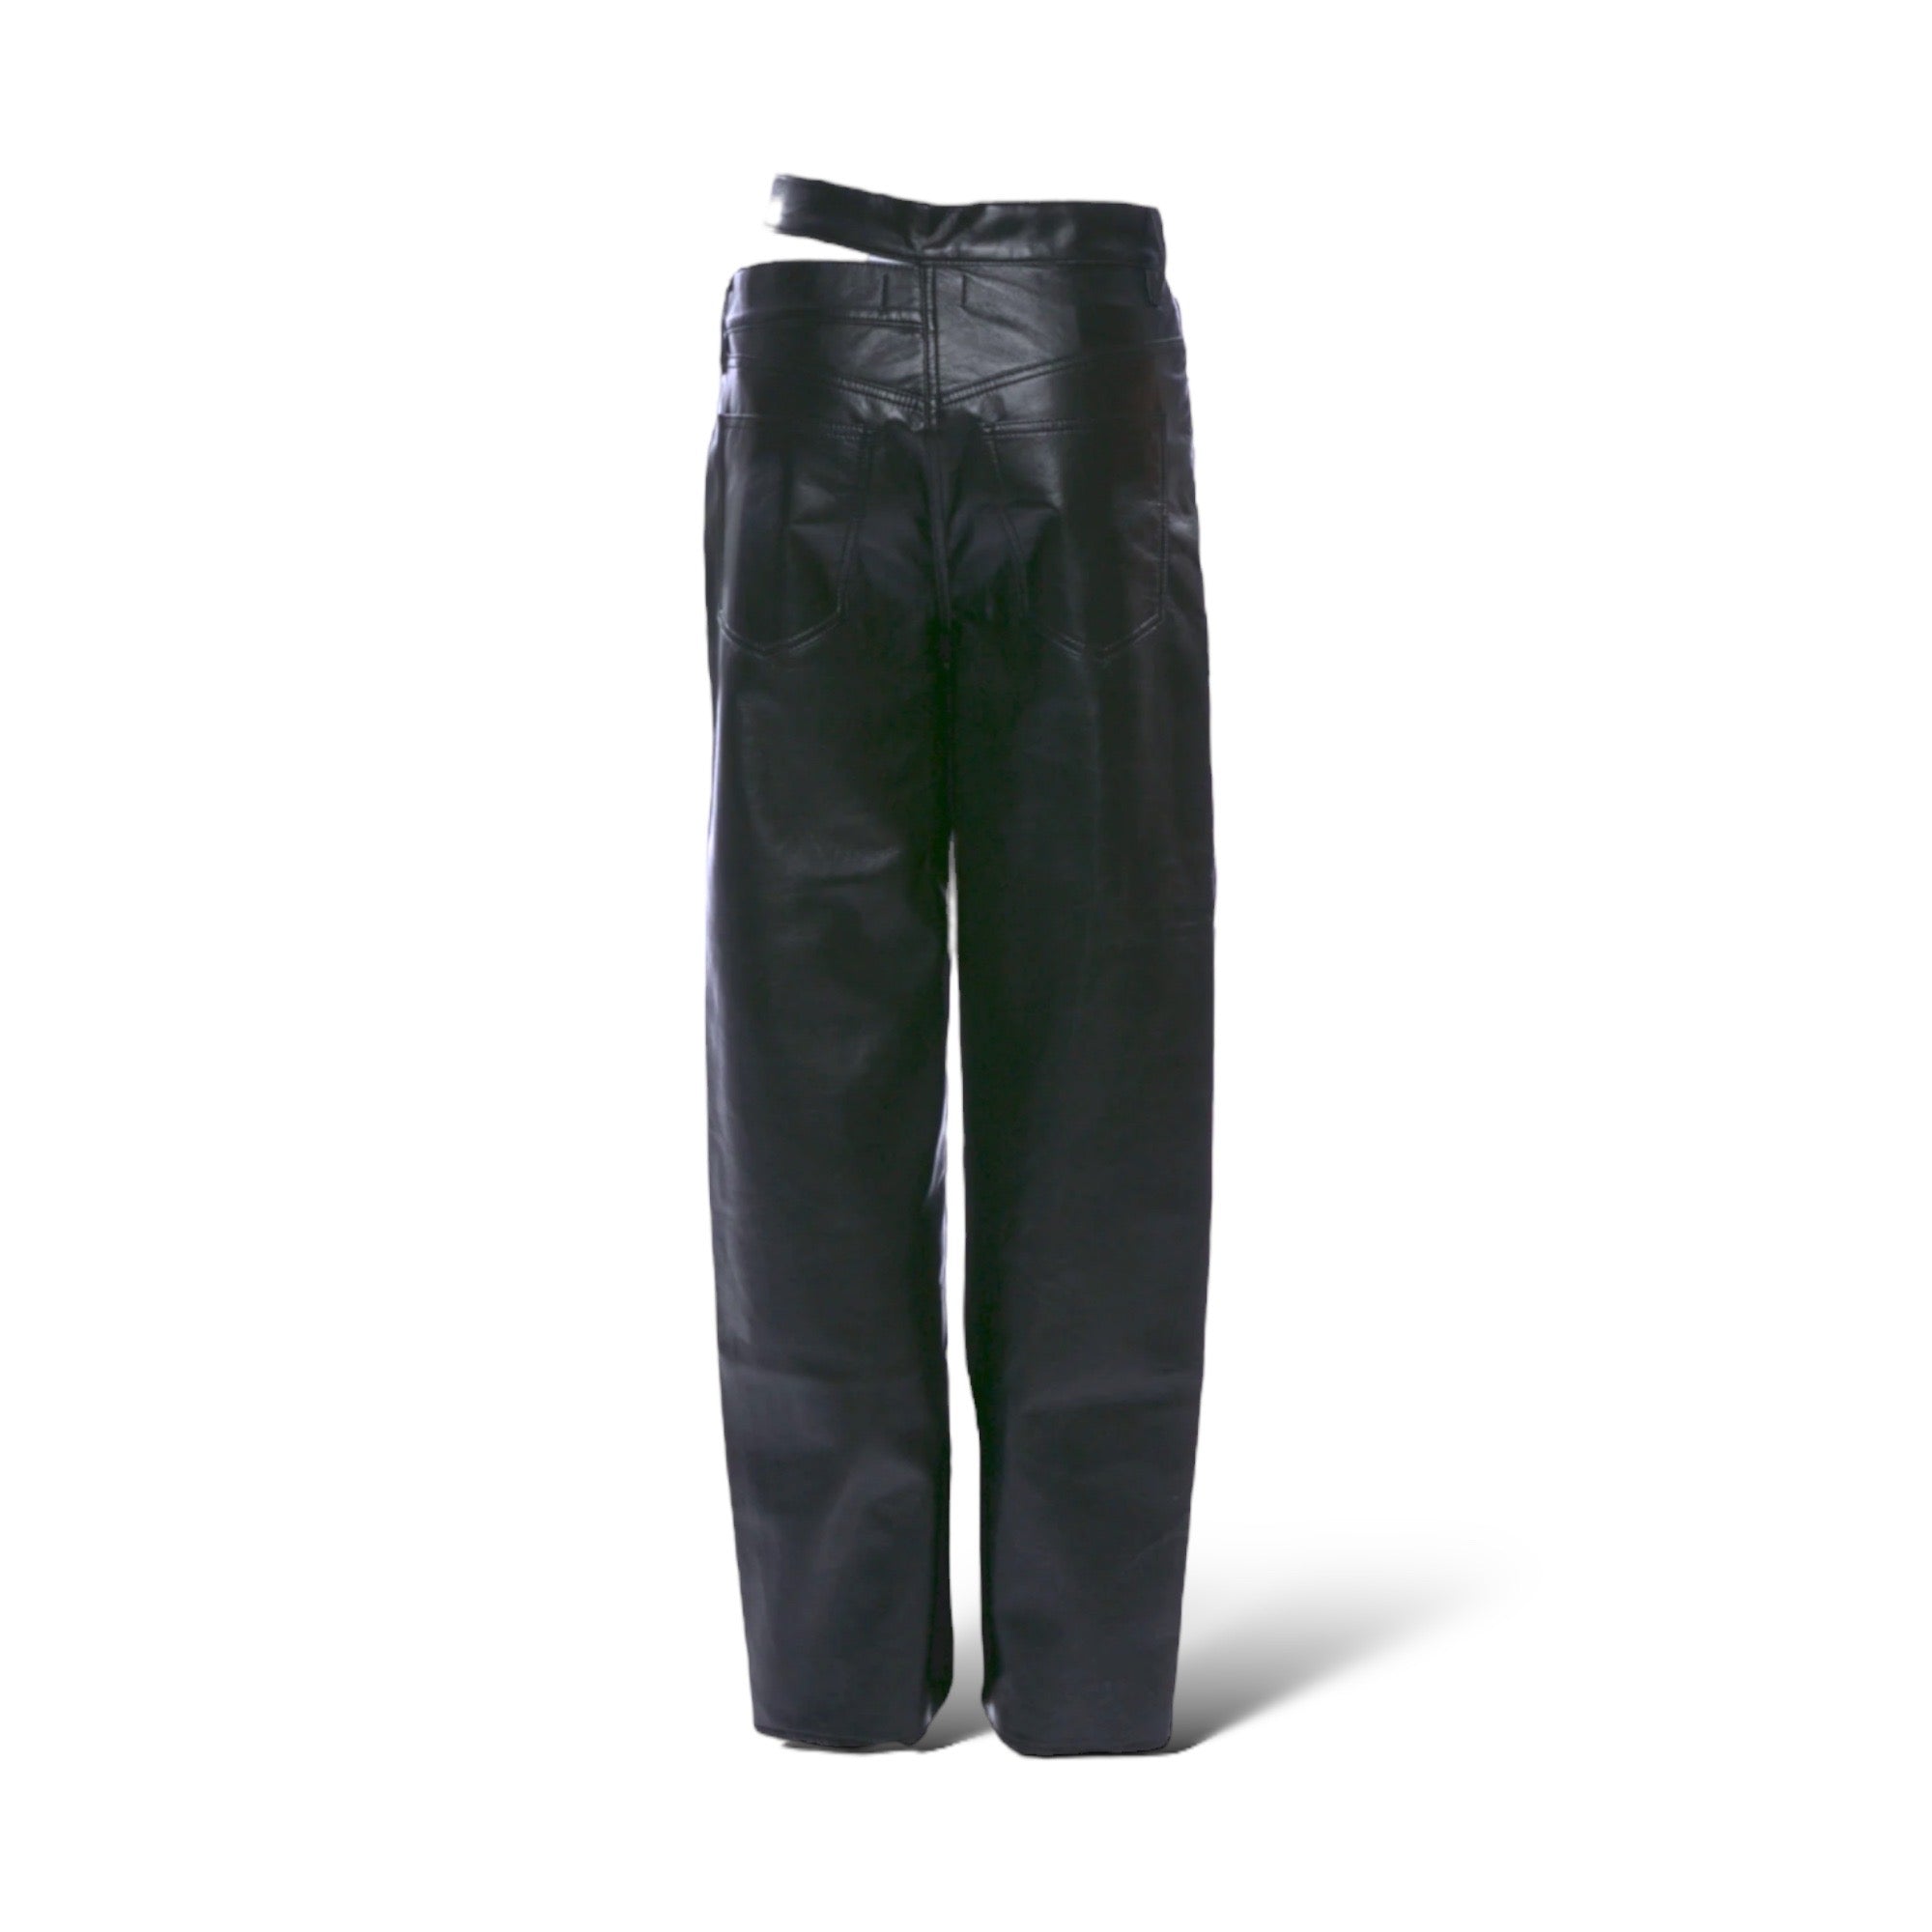 AGOLDE Wide Leg Black Leather Pants
|Size: S|